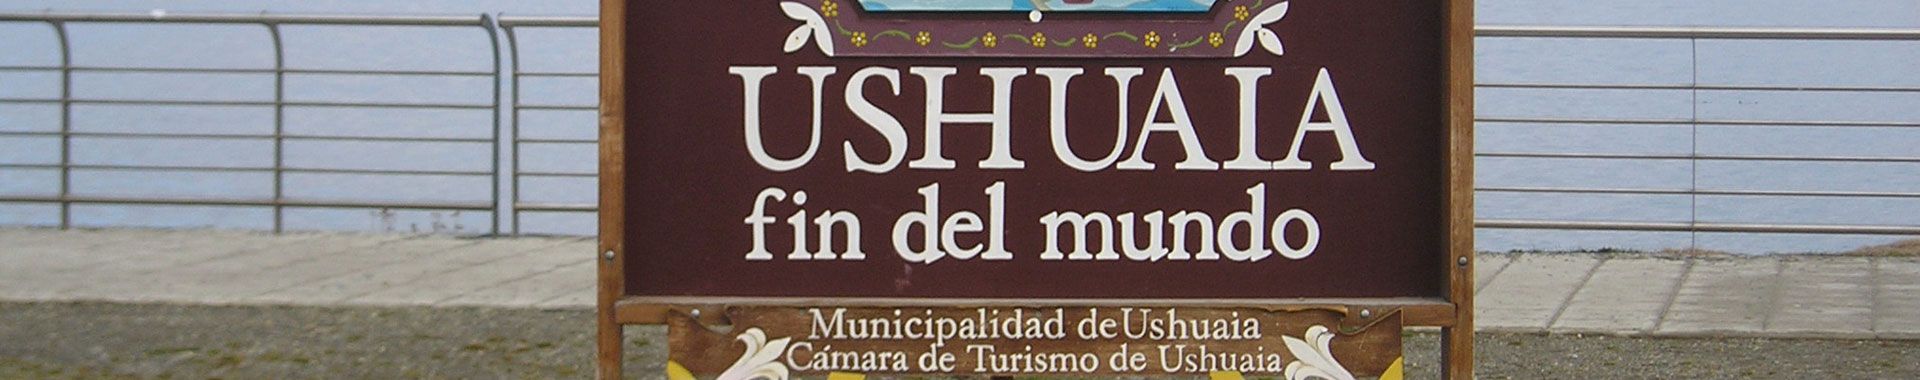 Argentina - Lugares - Ushuaia